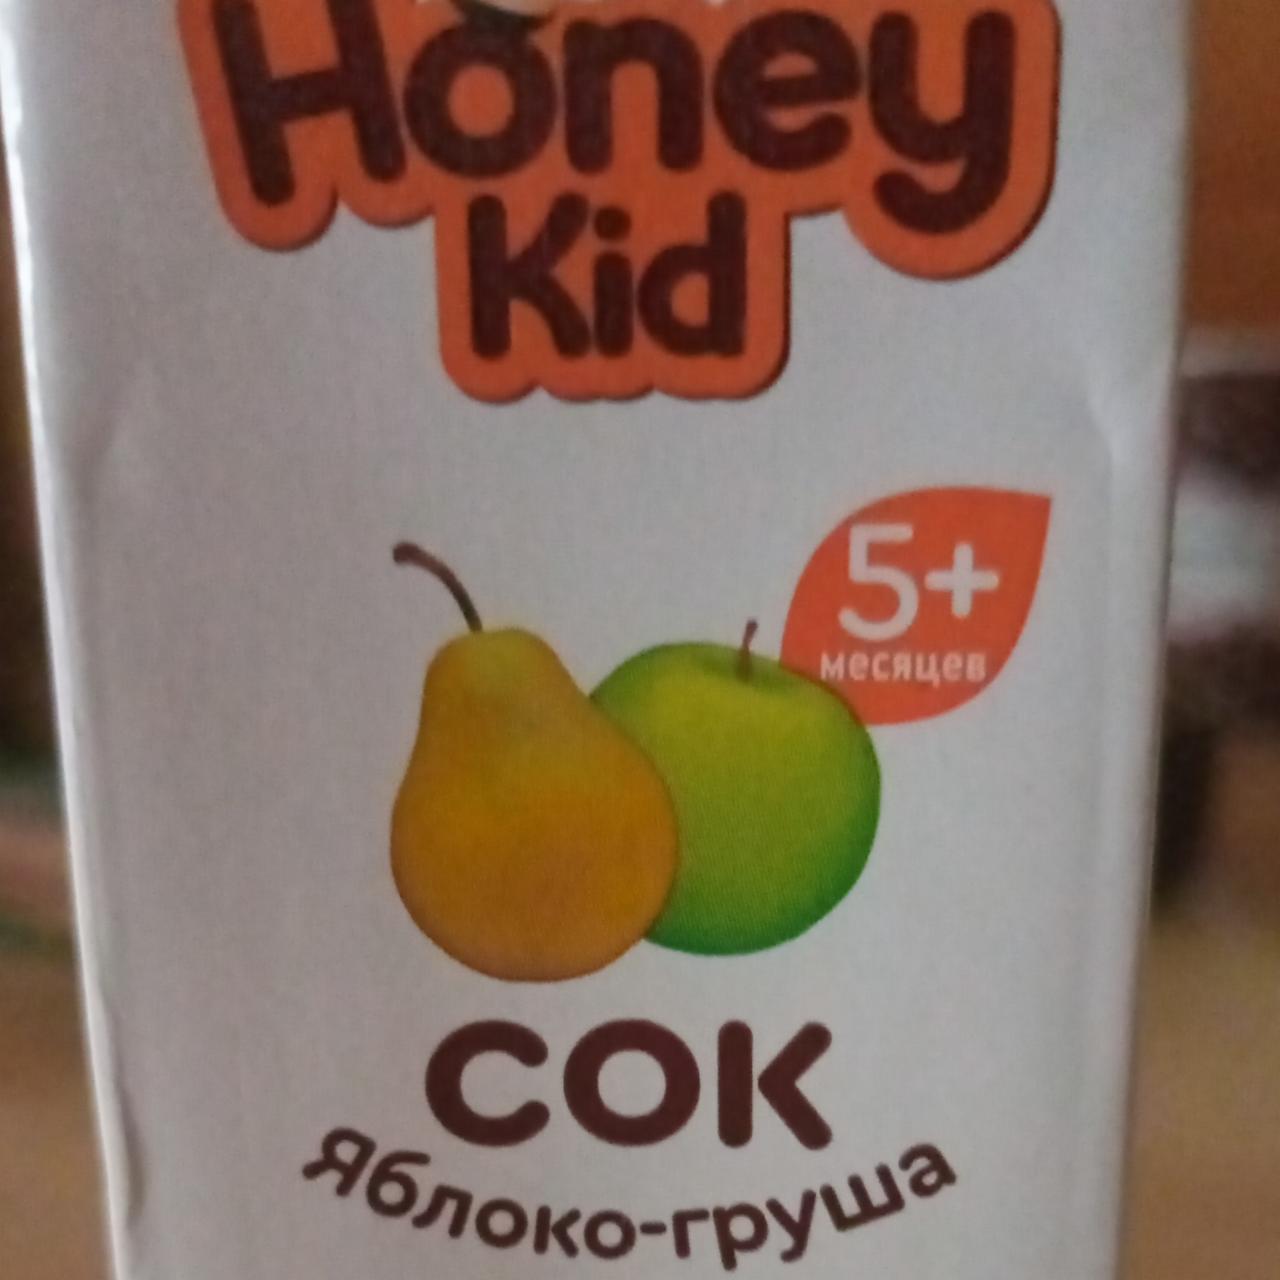 Фото - сок яблоко-груша Honey kid